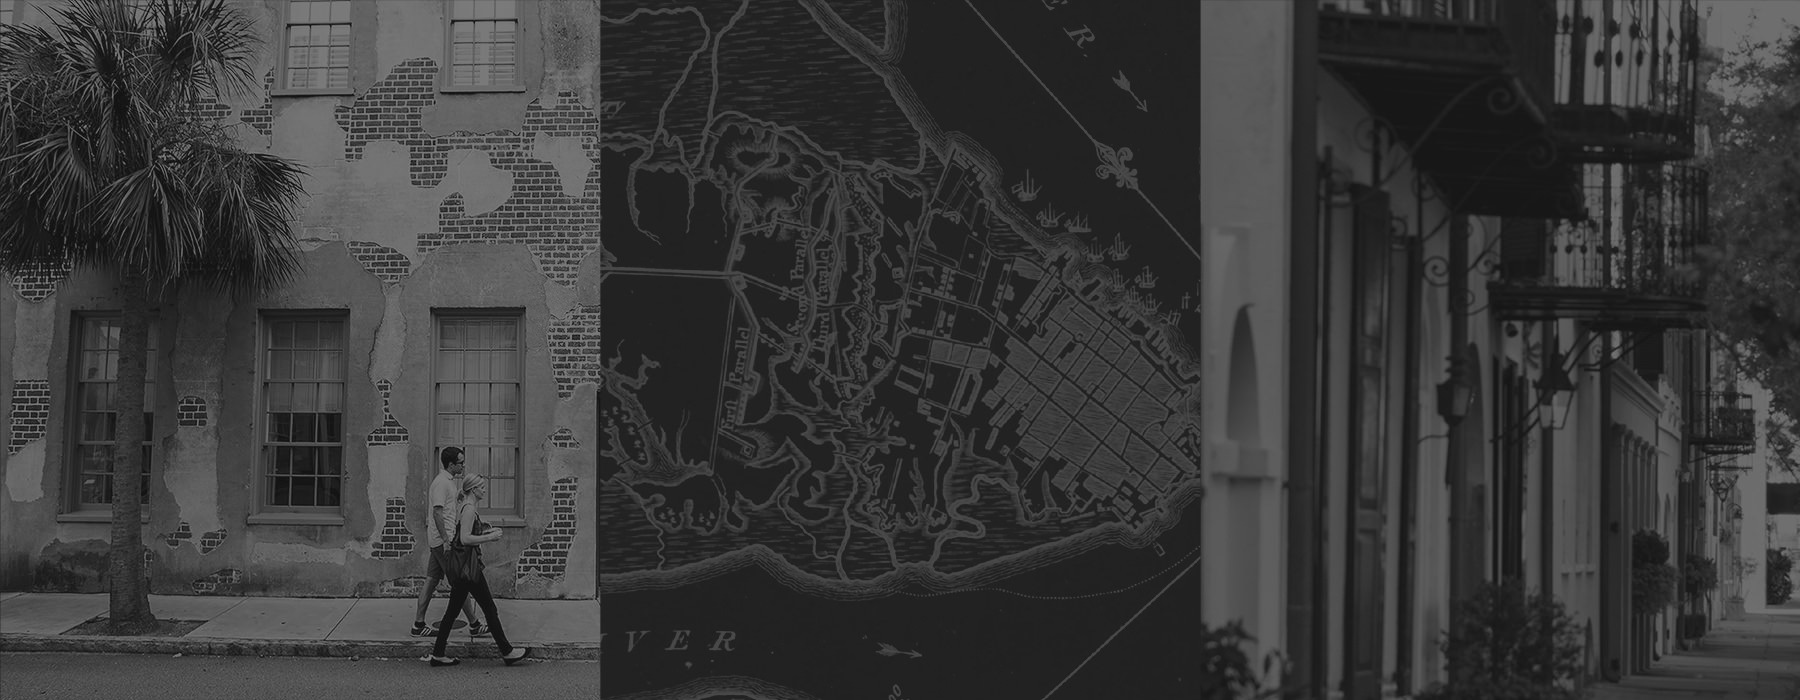 dark collage of Charleston, SC neighborhood images and map